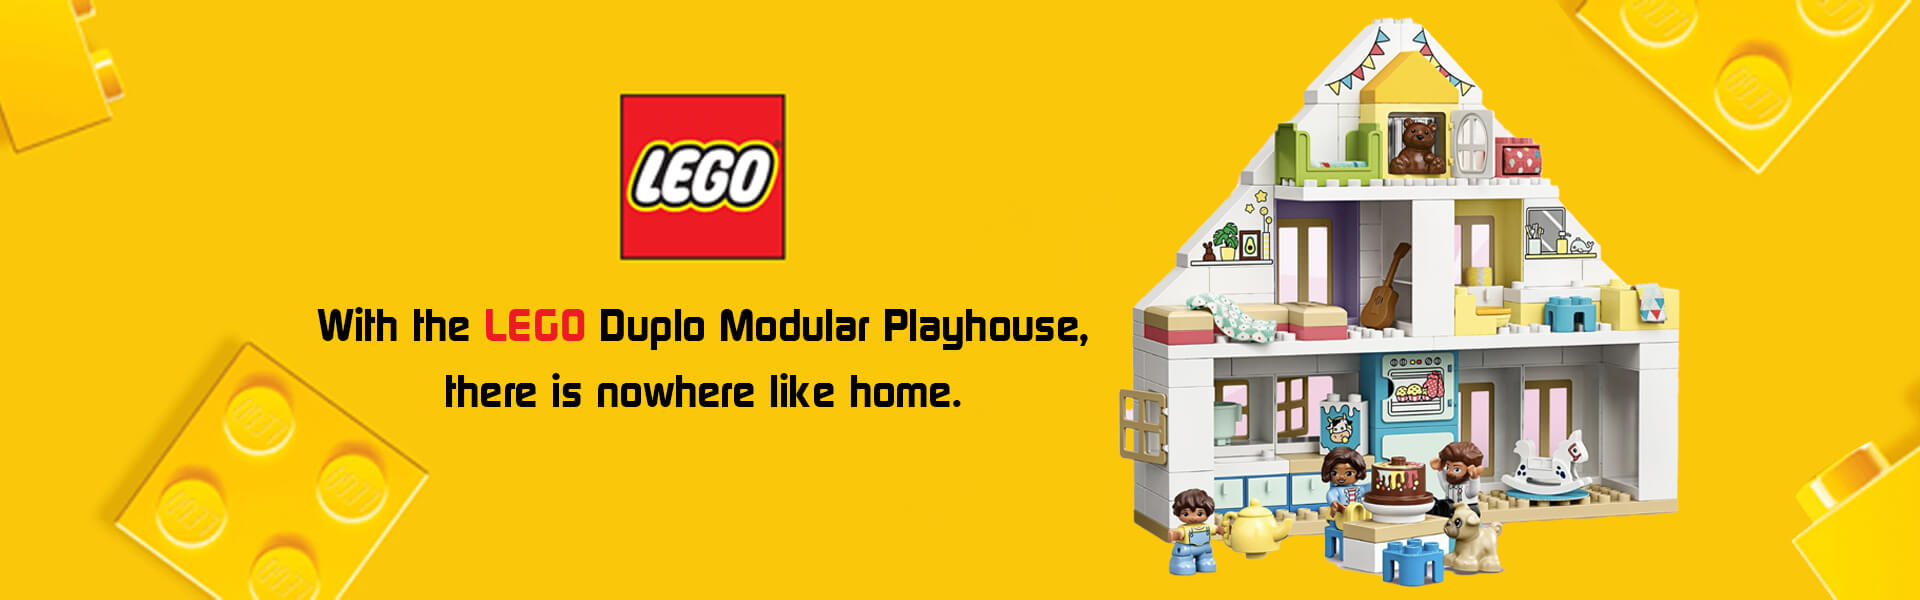 LEGO Duplo Modular Playhouse